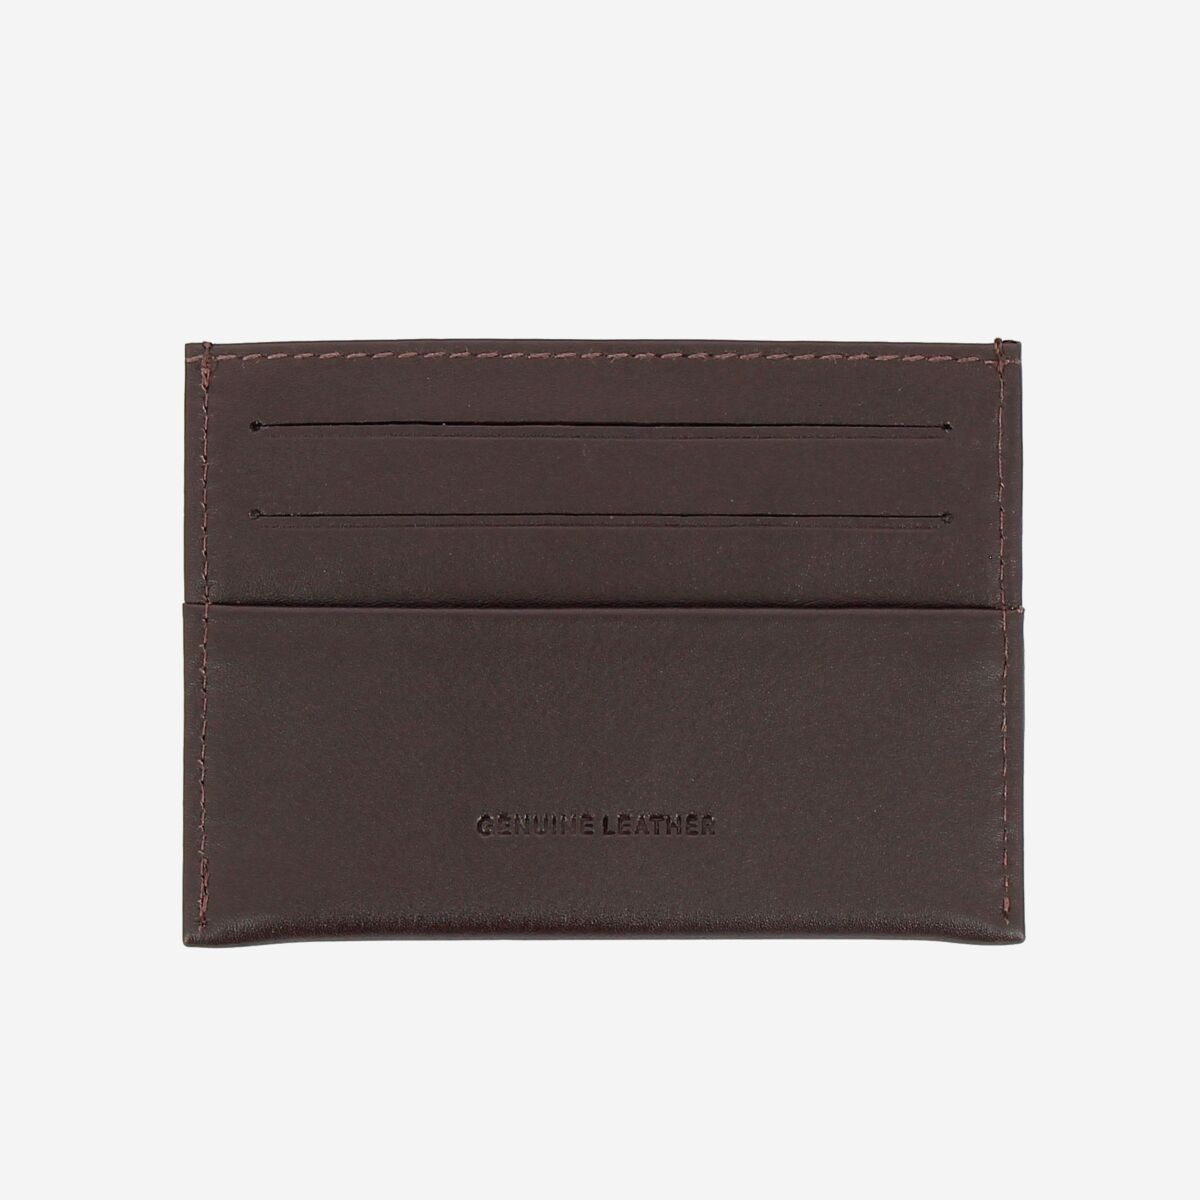 NUVOLA PELLE Minimalist leather credit card wallet - Dark Brown